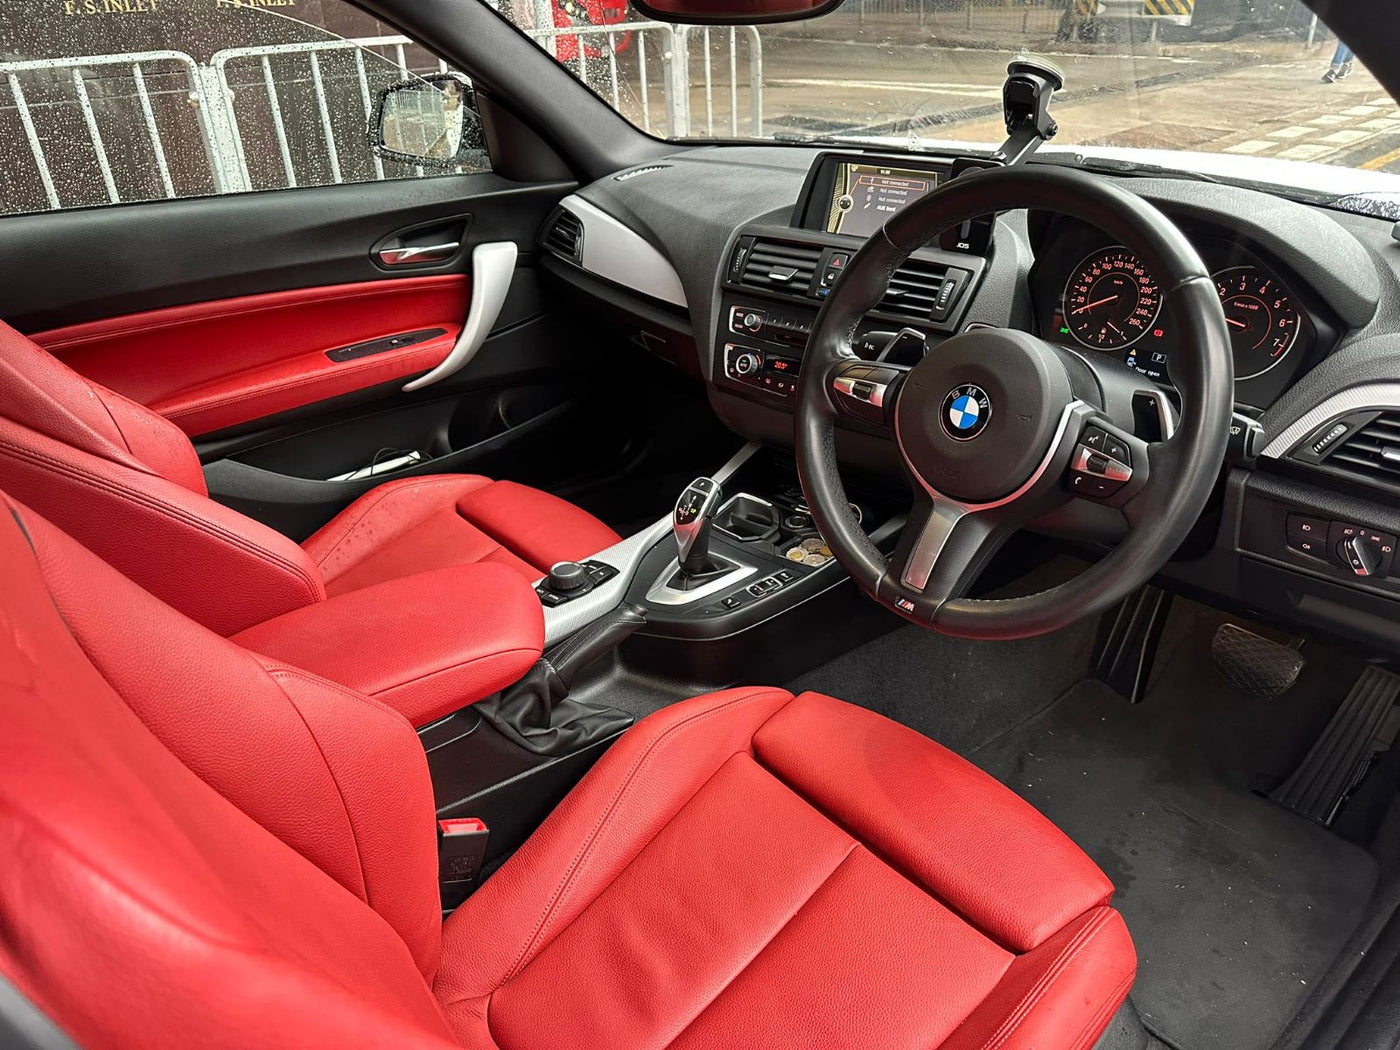 BMW 220iA Coupe M Sport 2014